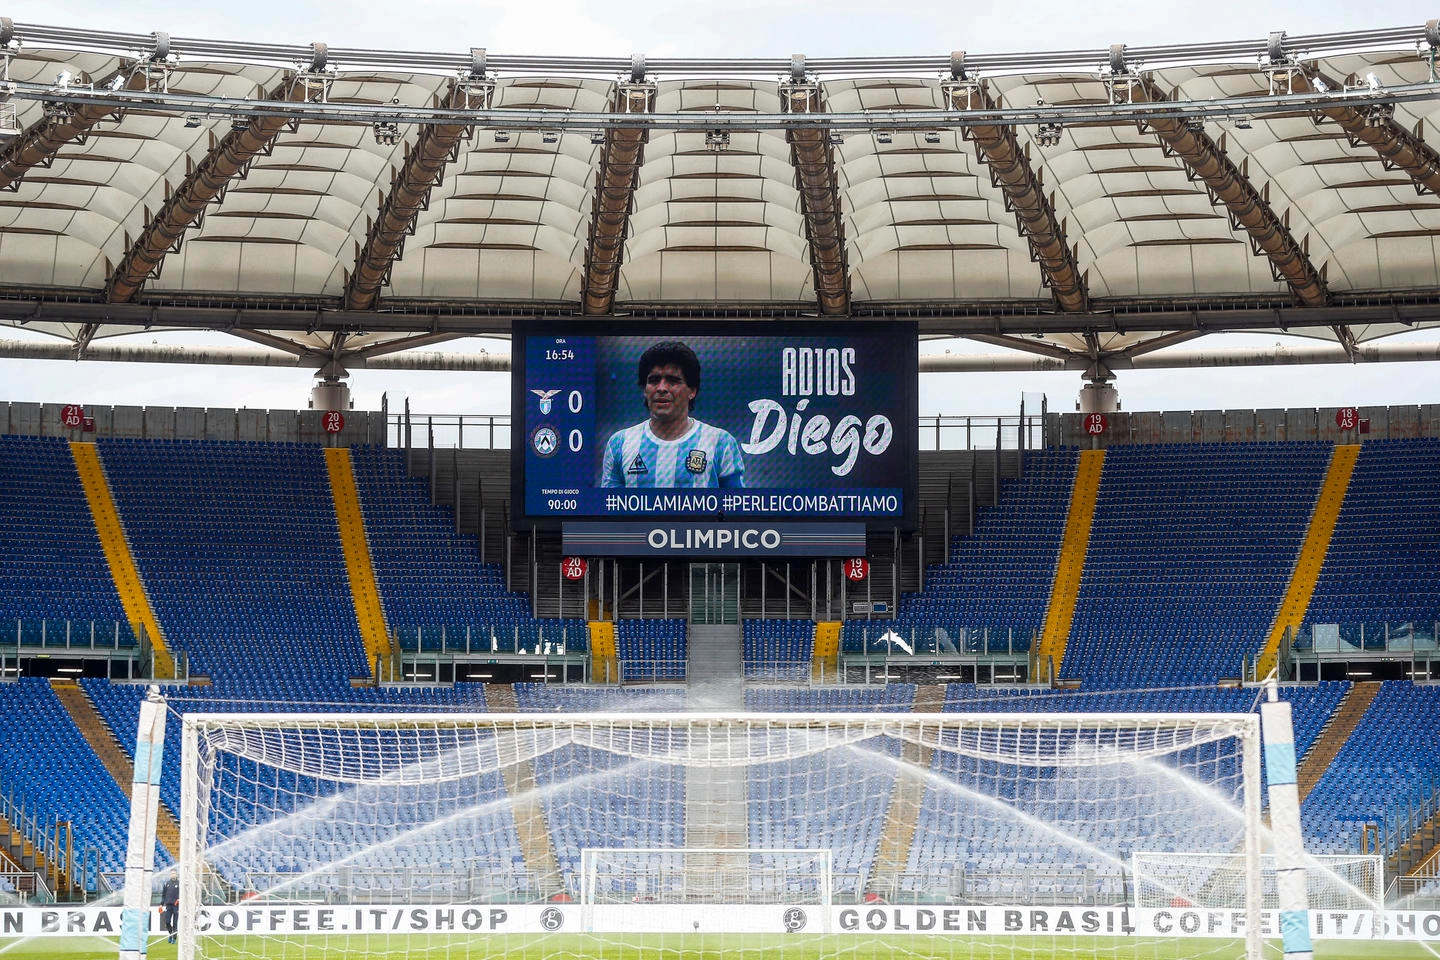 L'omaggio a Maradona all'Olimpico (Ansa)